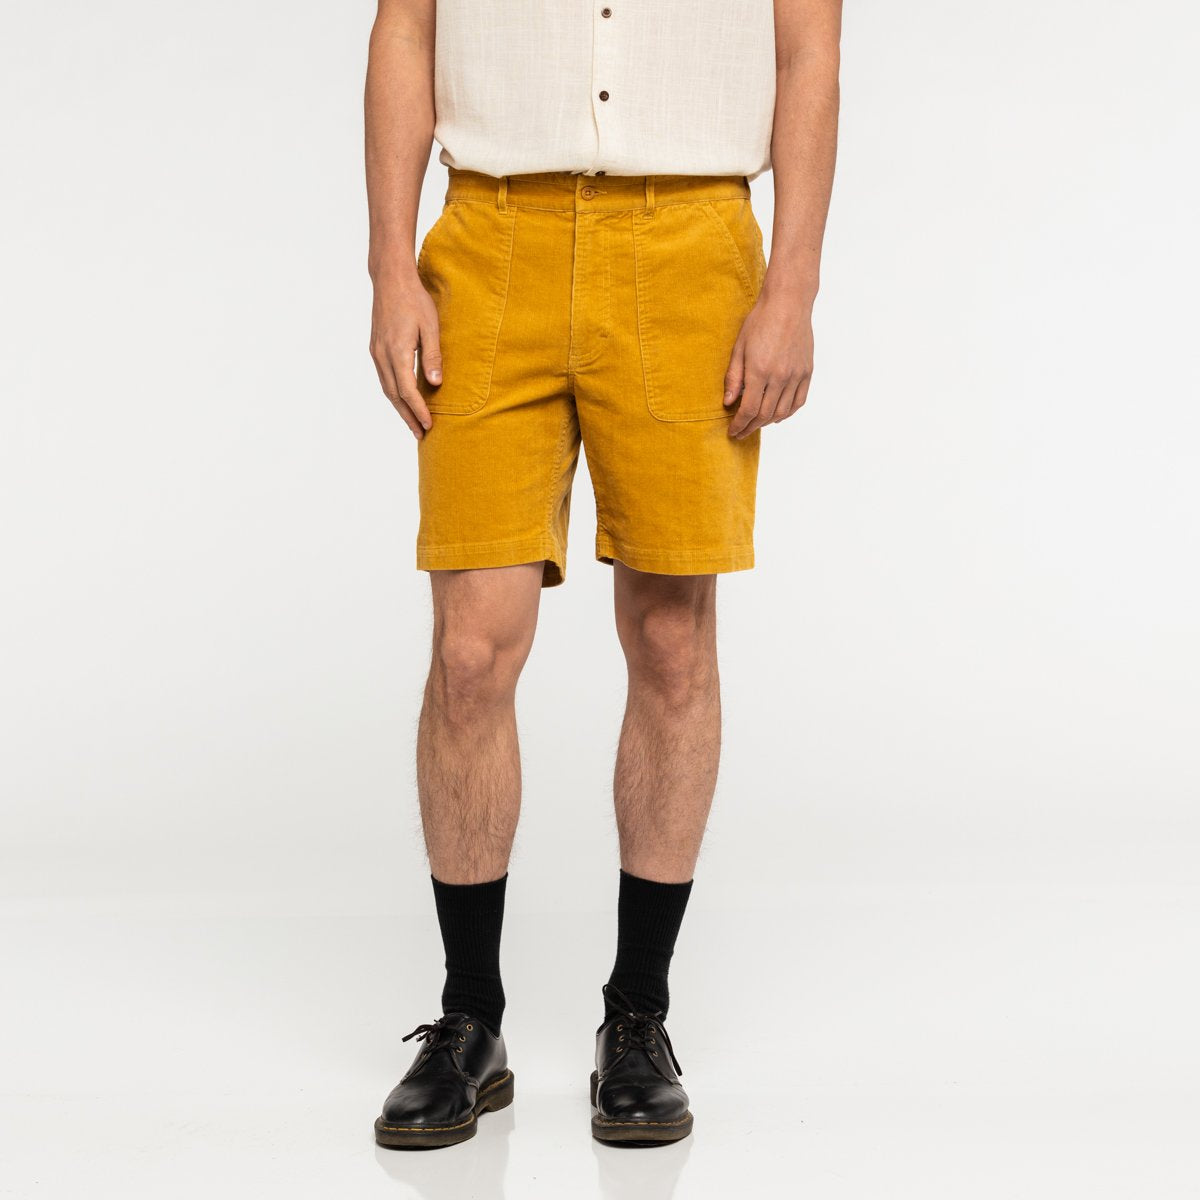 Banks Journal Big Bear Walkshort, 18” Corduroy Shorts for Men with